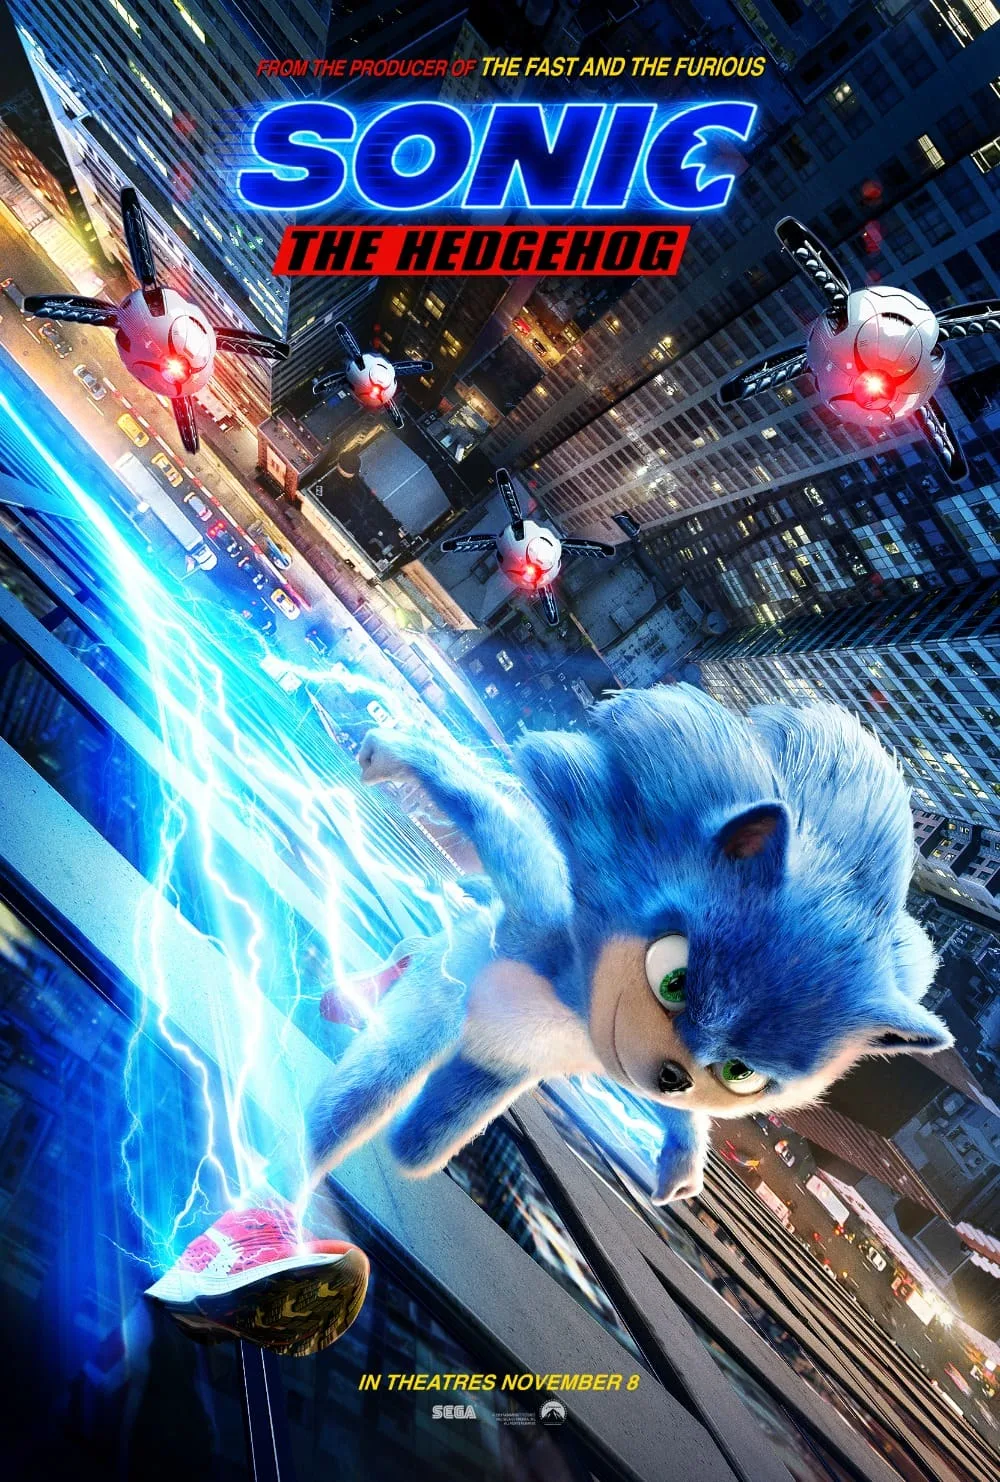 Sonic the Hedgehog Movie Trailer.